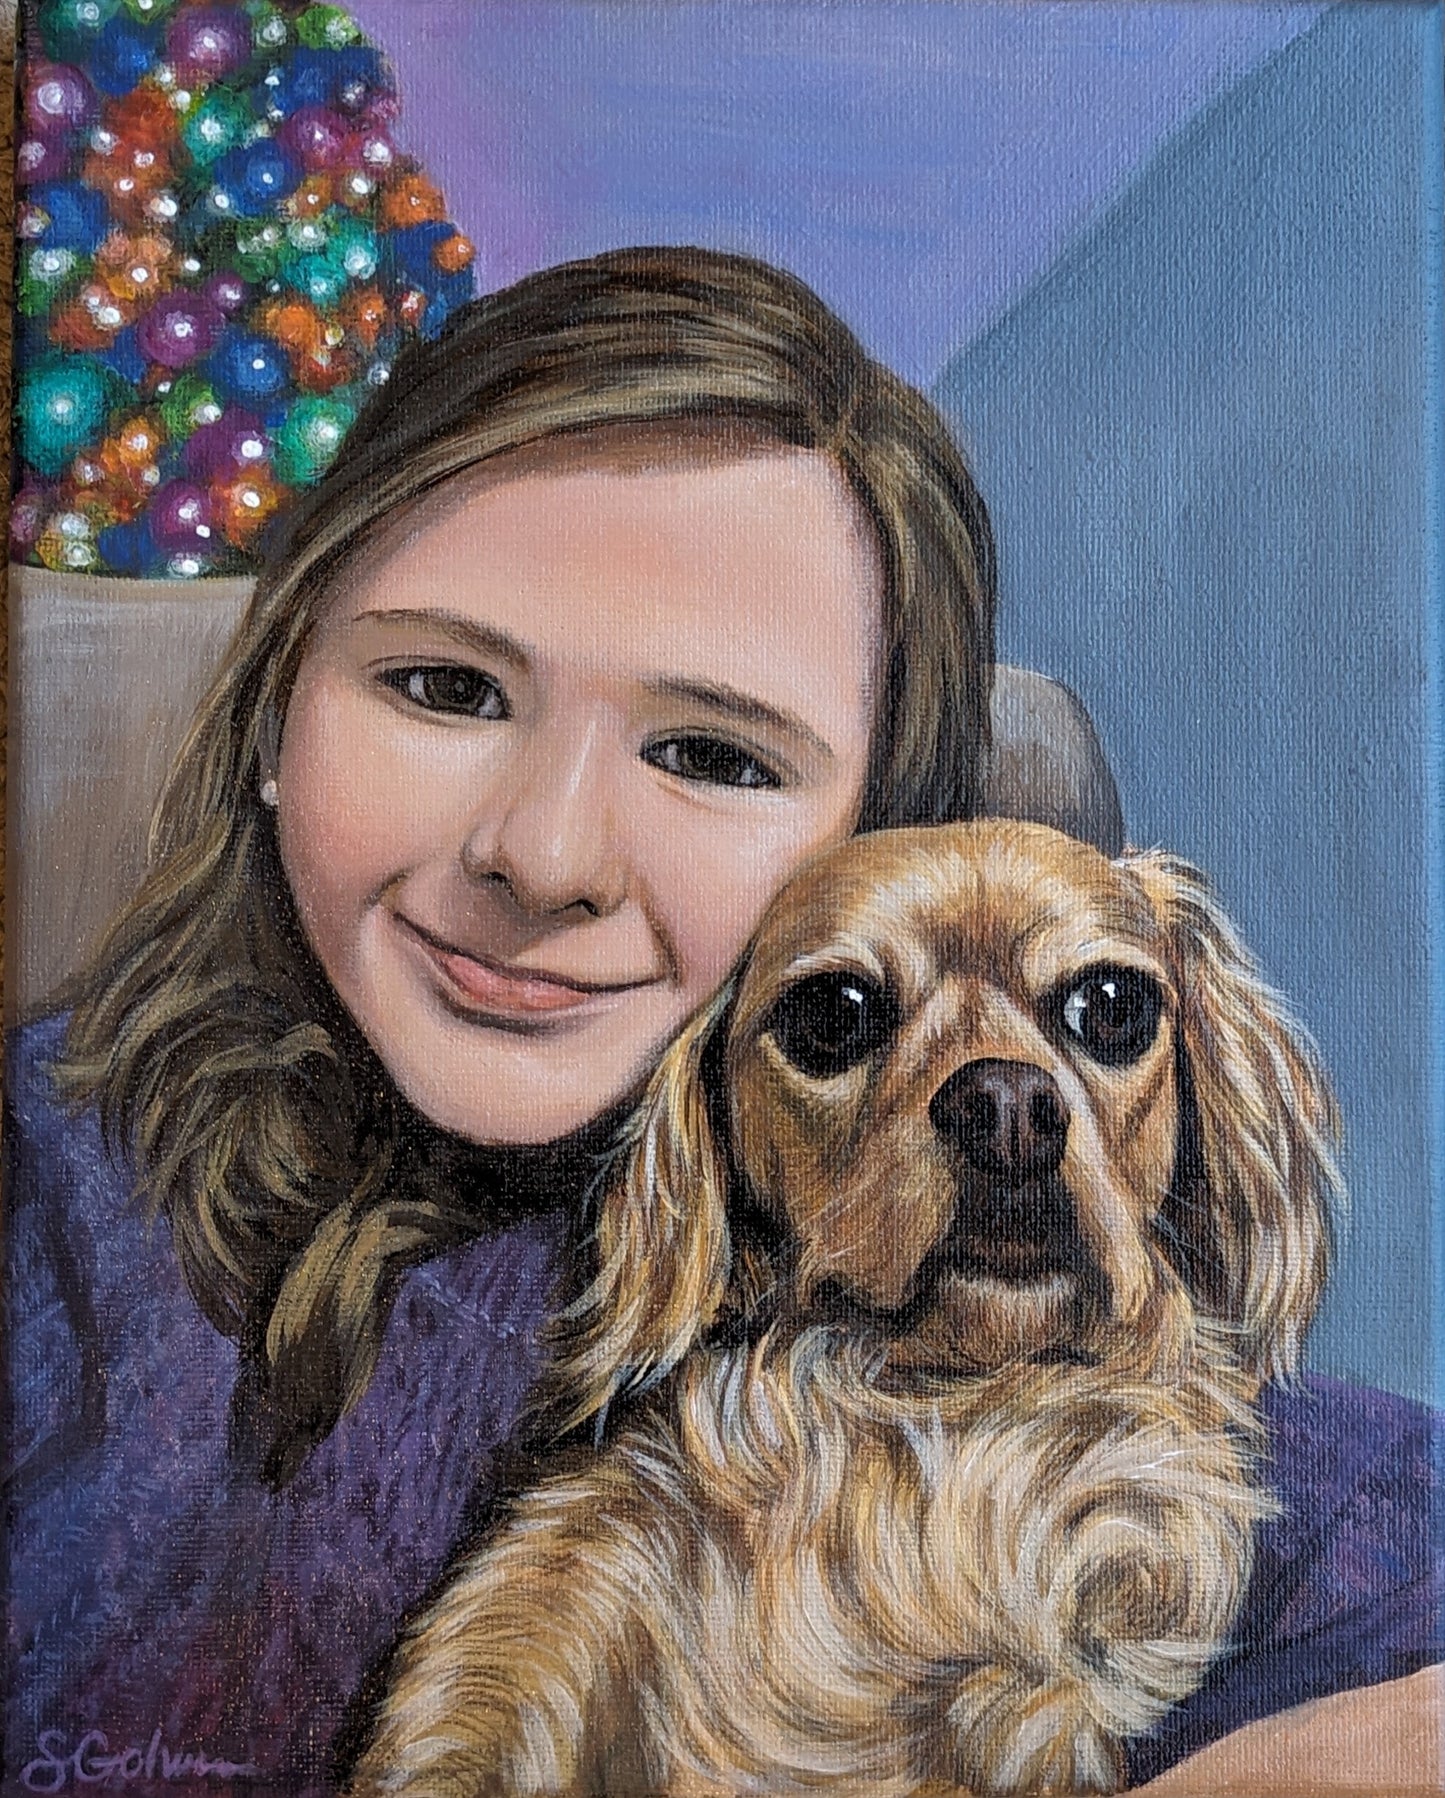 My Pet & Me - Custom Portrait on canvas